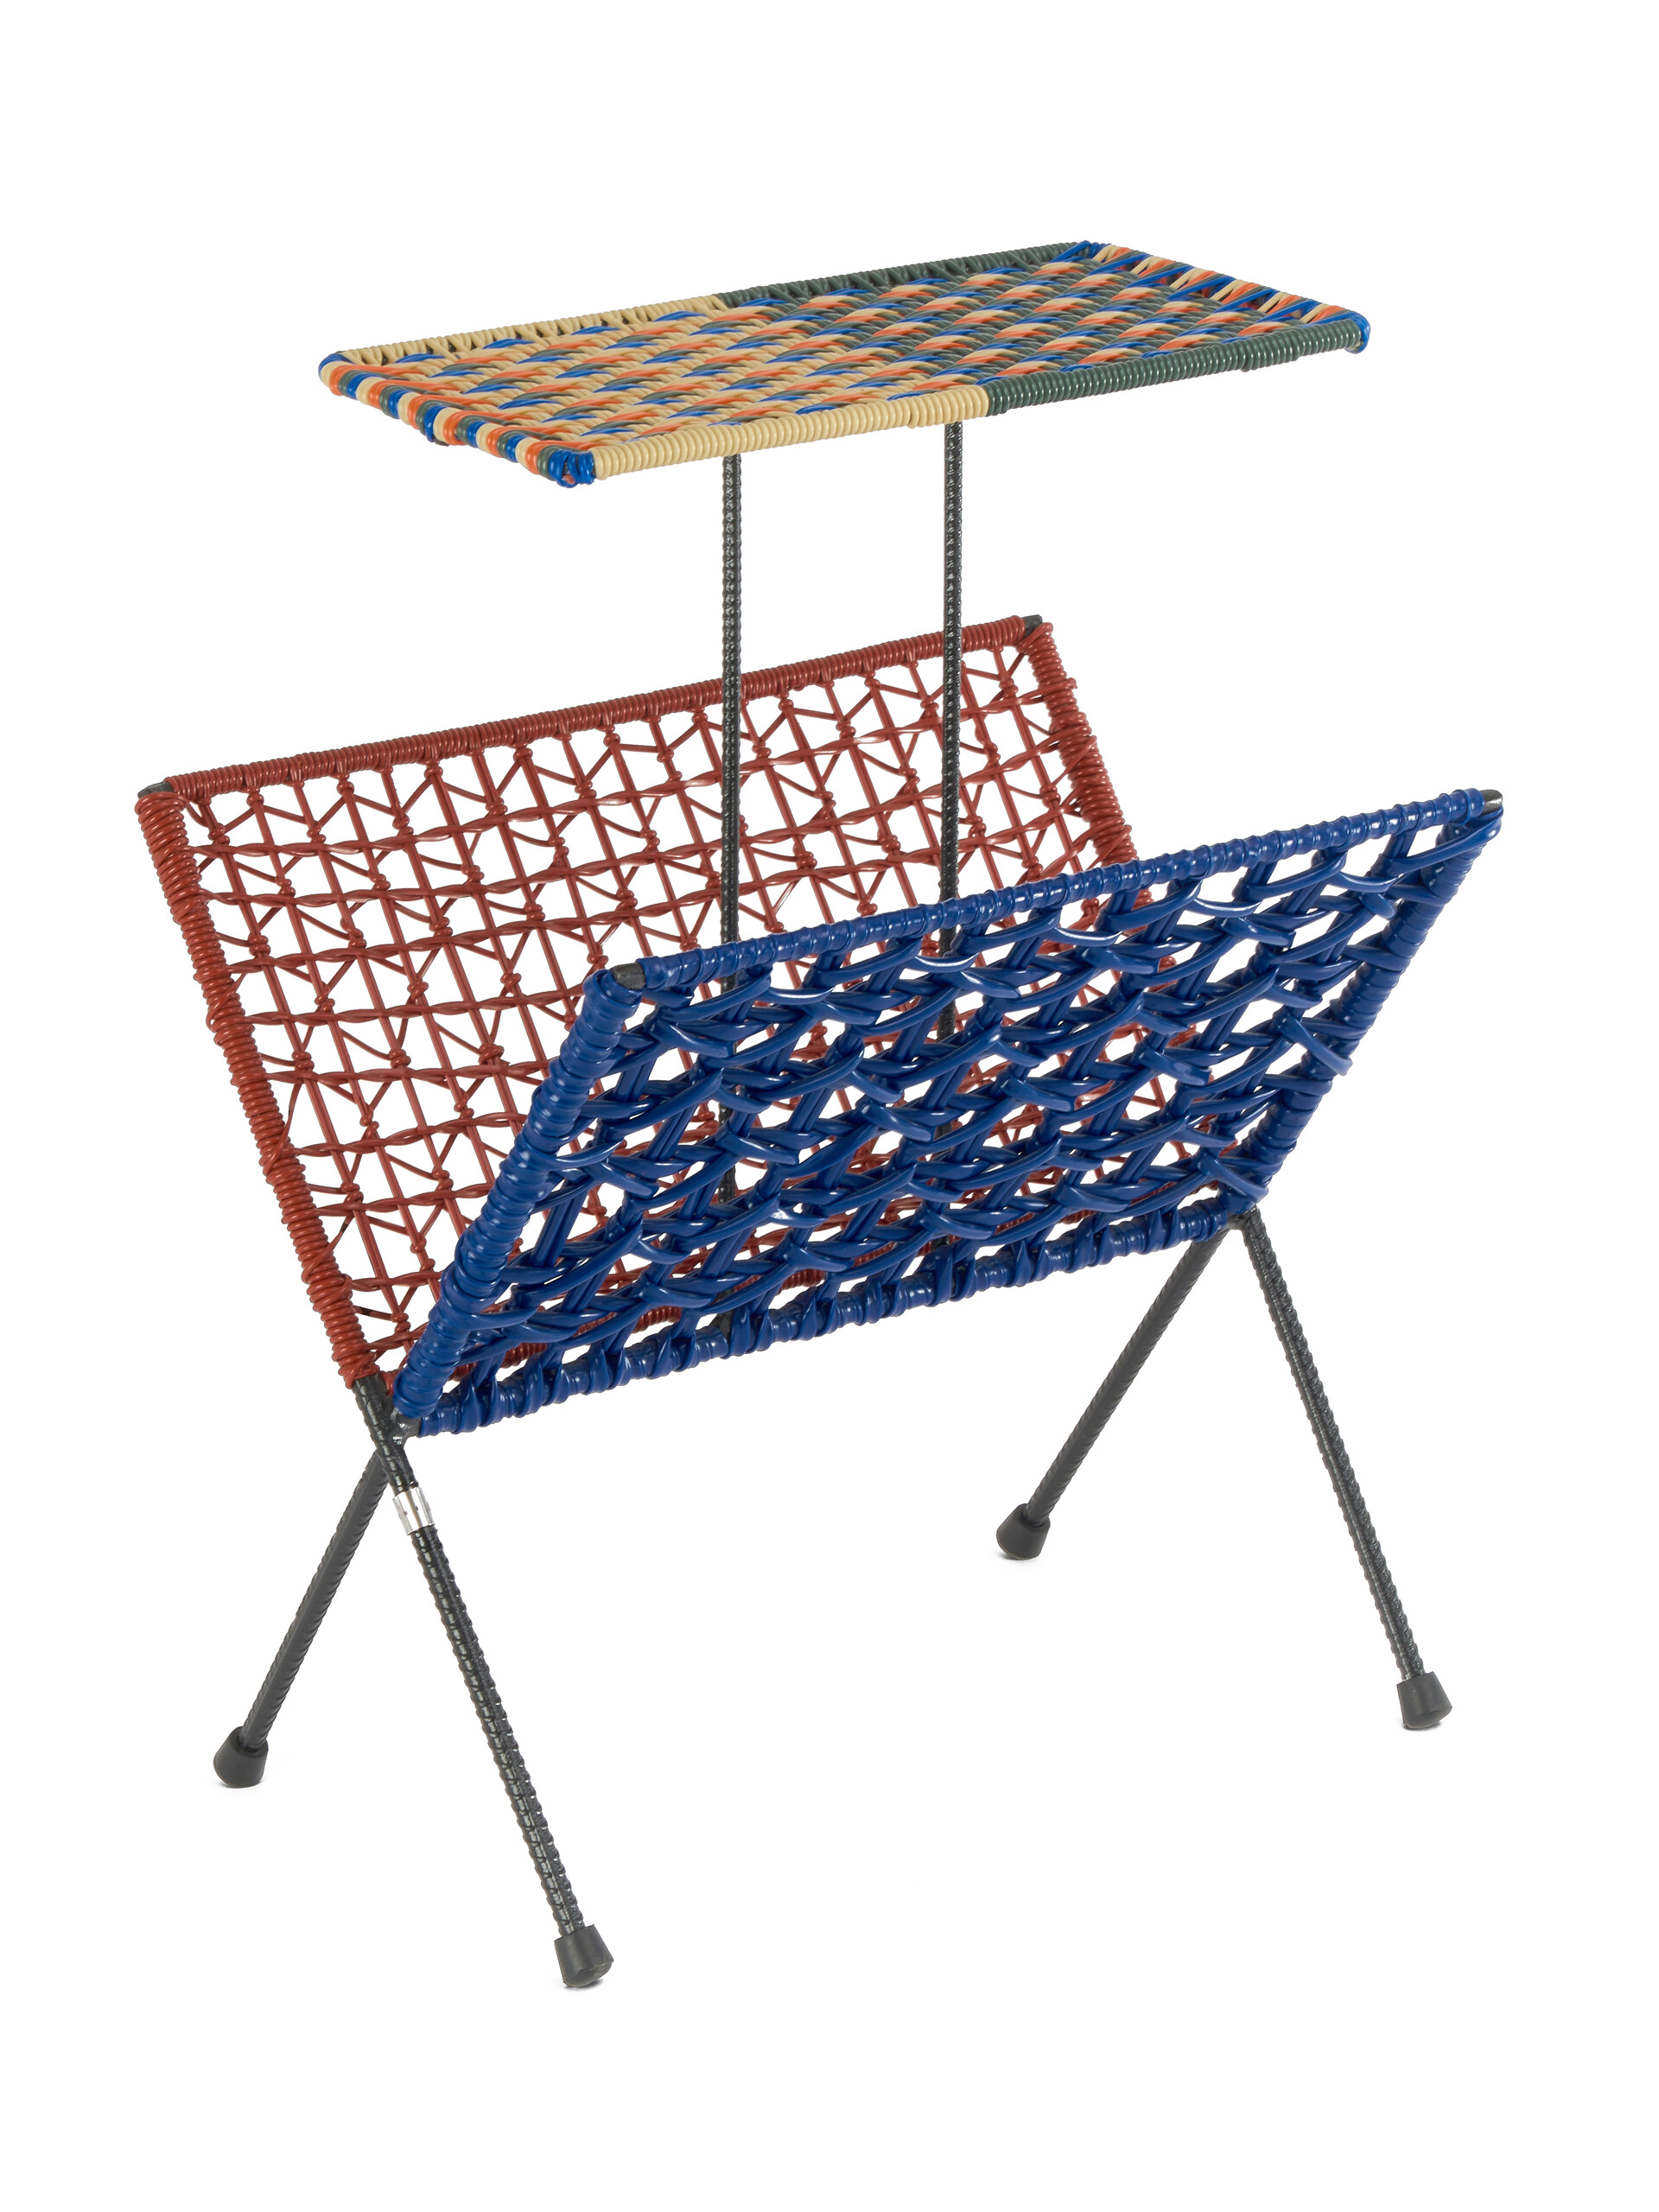 Red and blue Marni Market magazine rack with shelf - Furniture - Image 3